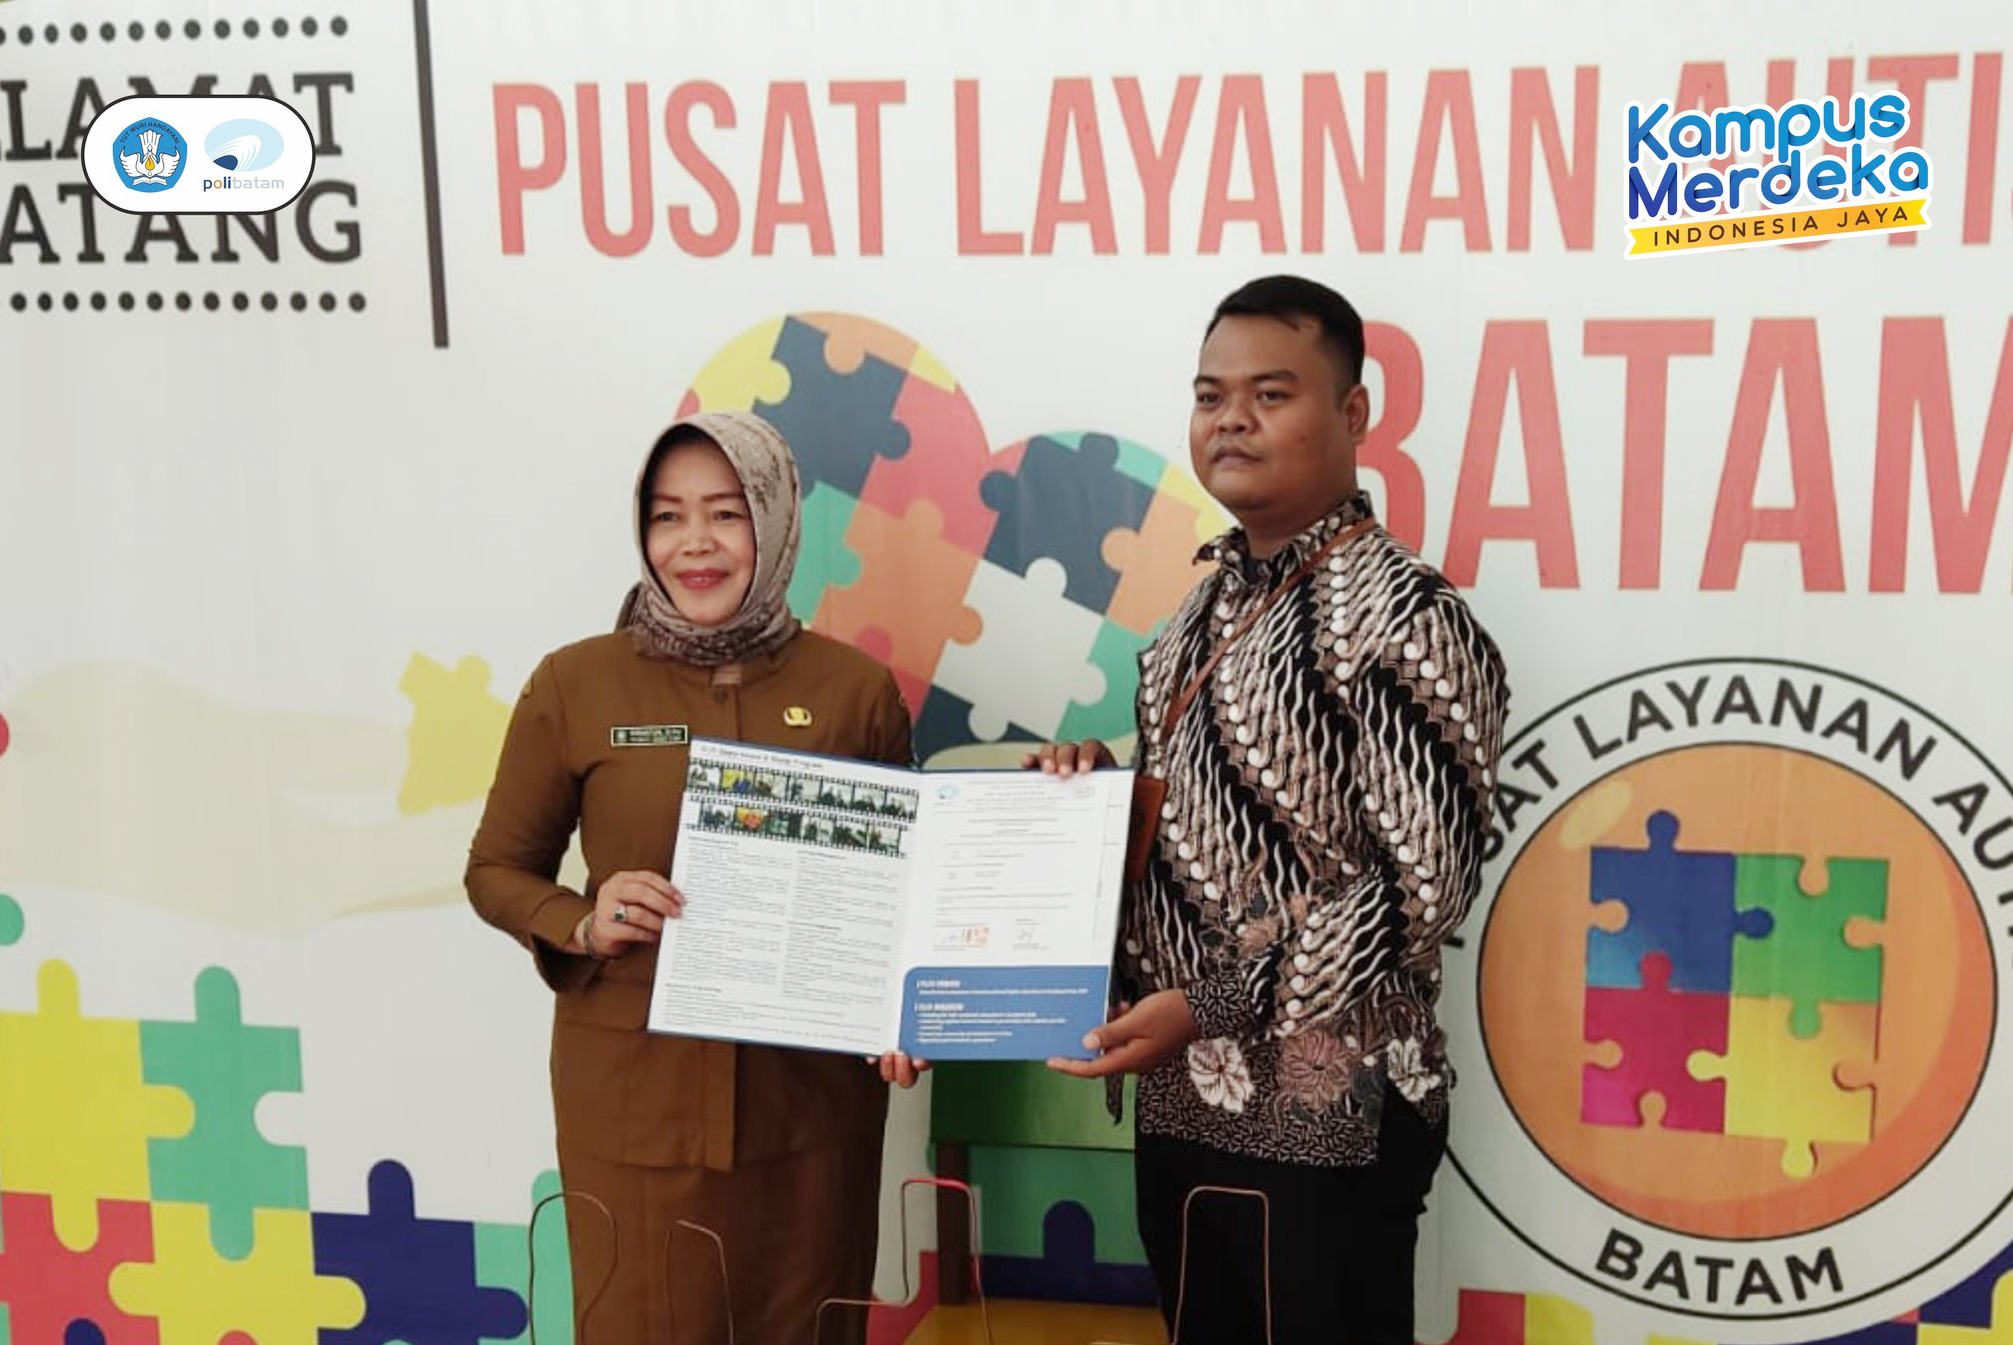 Polibatam Community Service to the Autism Service Center and SMK Pertiwi Batam